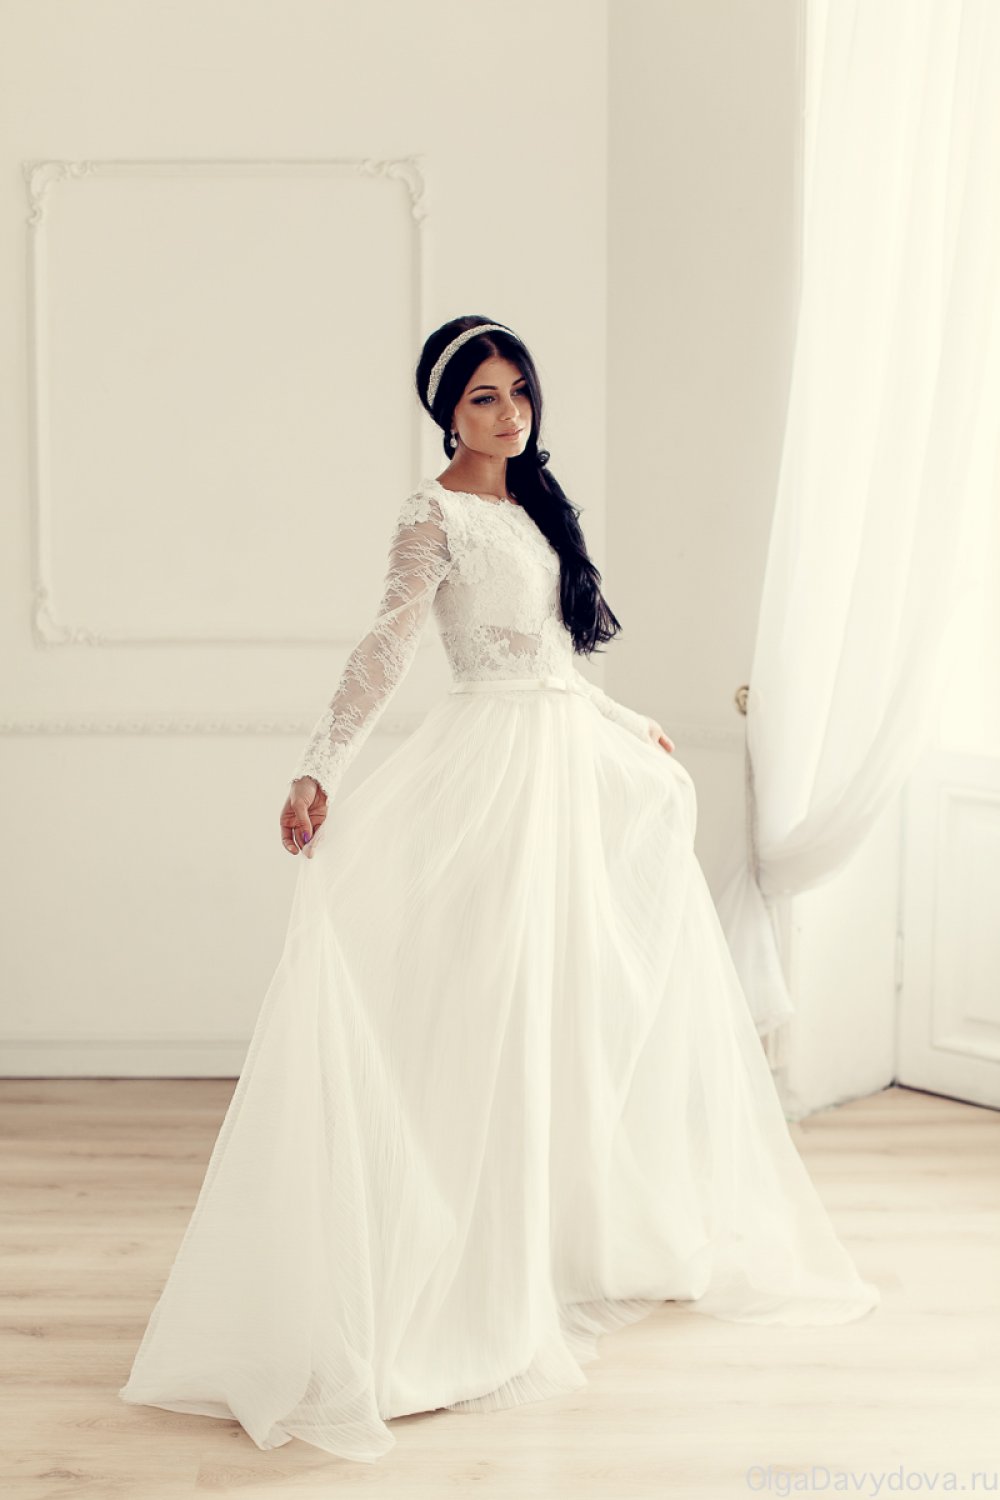 Свадебное платье Мириам http://www.vesnawedding.ru/katalog-svadebnyh-platev/svadebnoe-plate-miriam